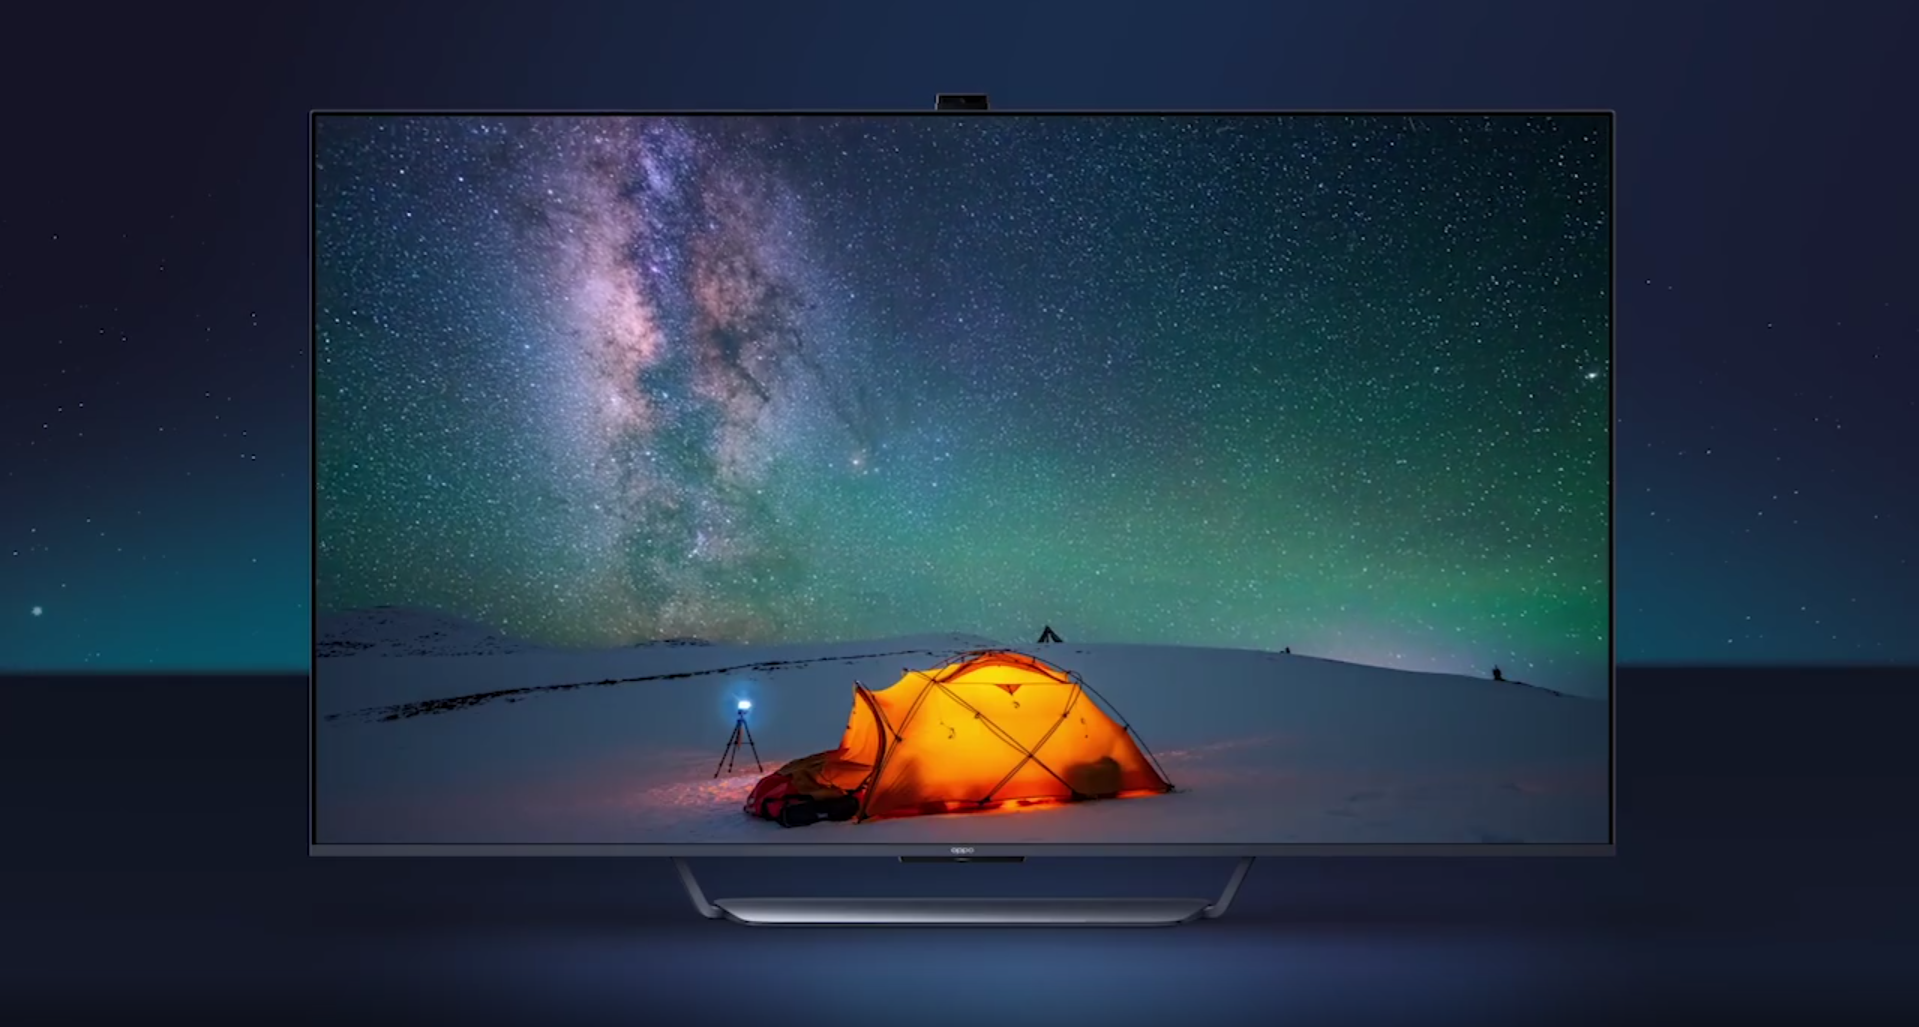 OPPO Smart TV new teaser poster hints at floating screen design